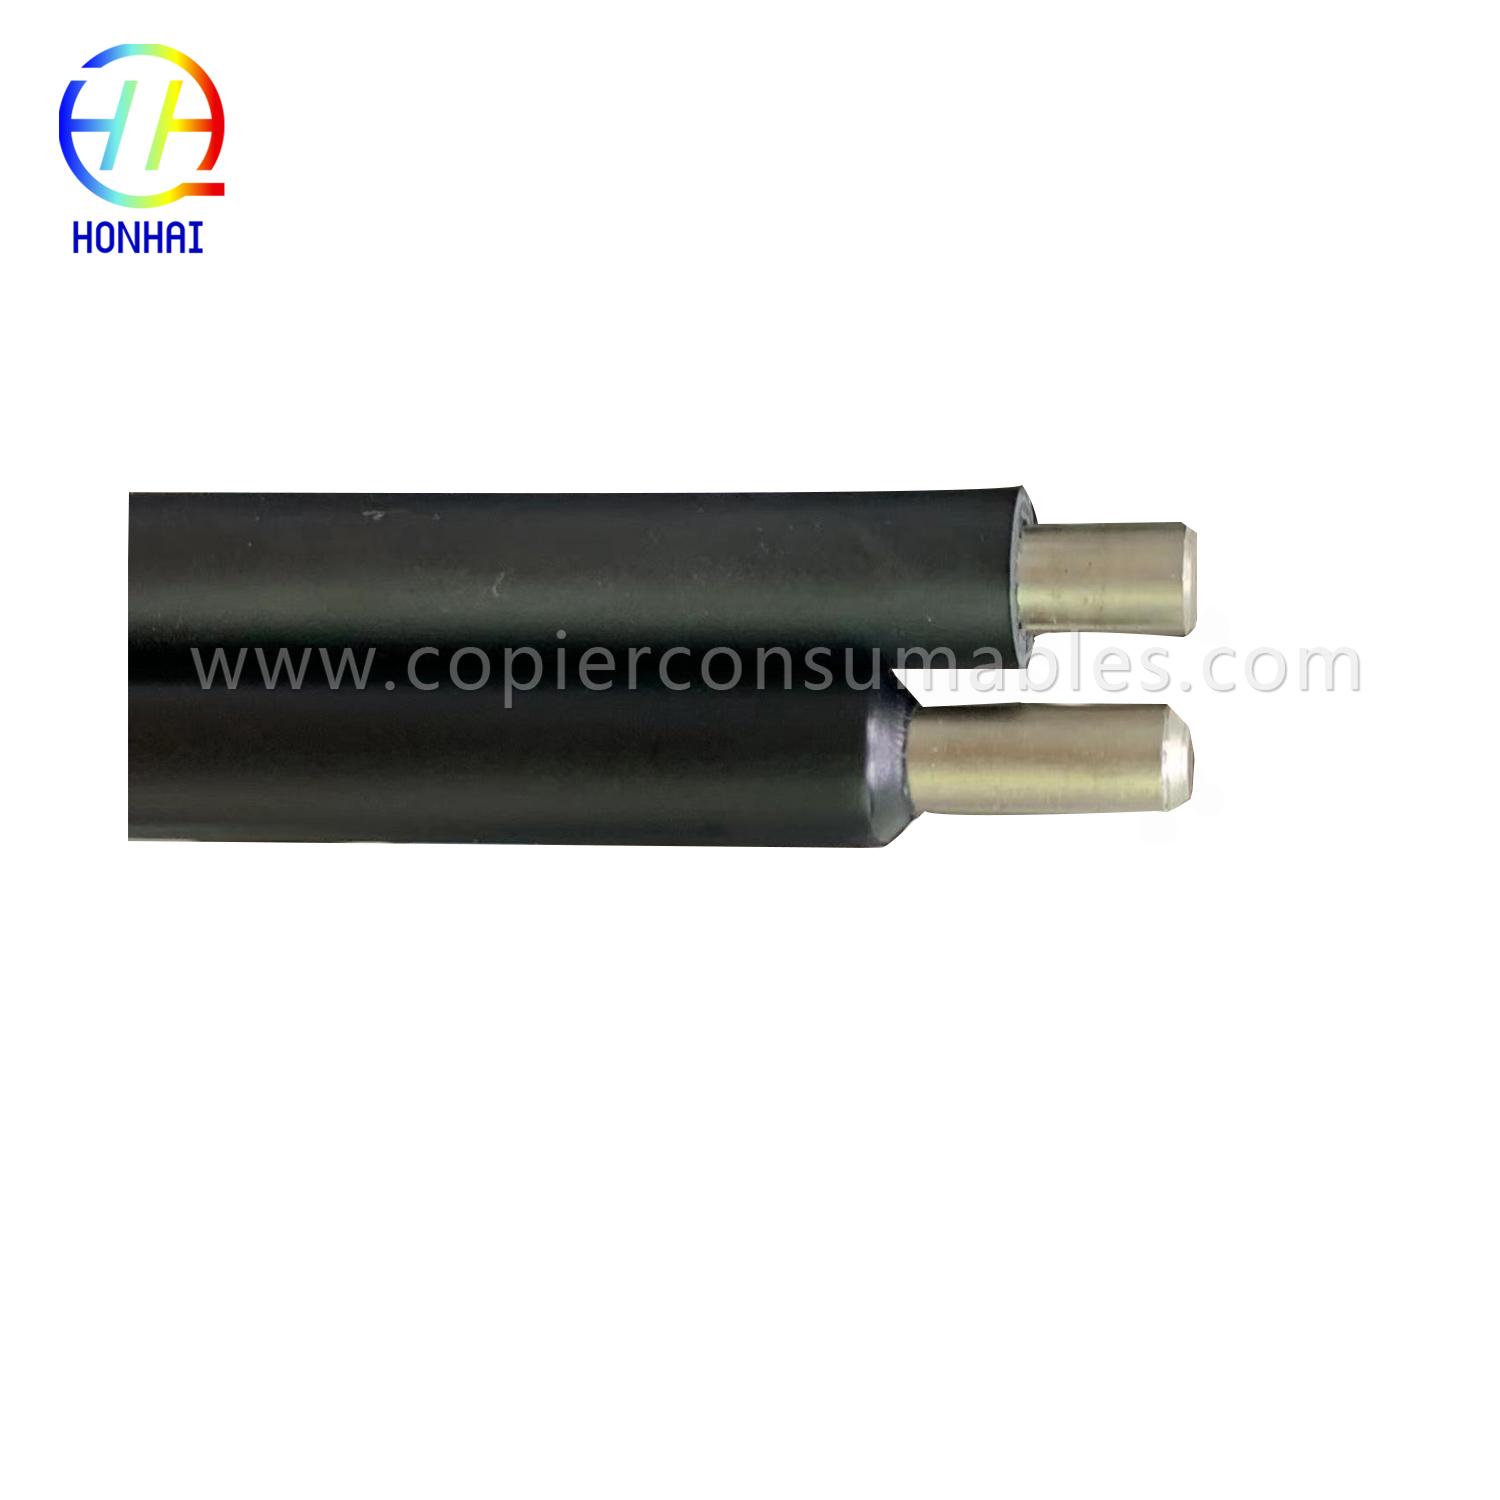 Primary Charge Roller for HP LaserJet 9000 9040 9050 (RG5-5750-000 C8519-69035 C8519-69033) OEM